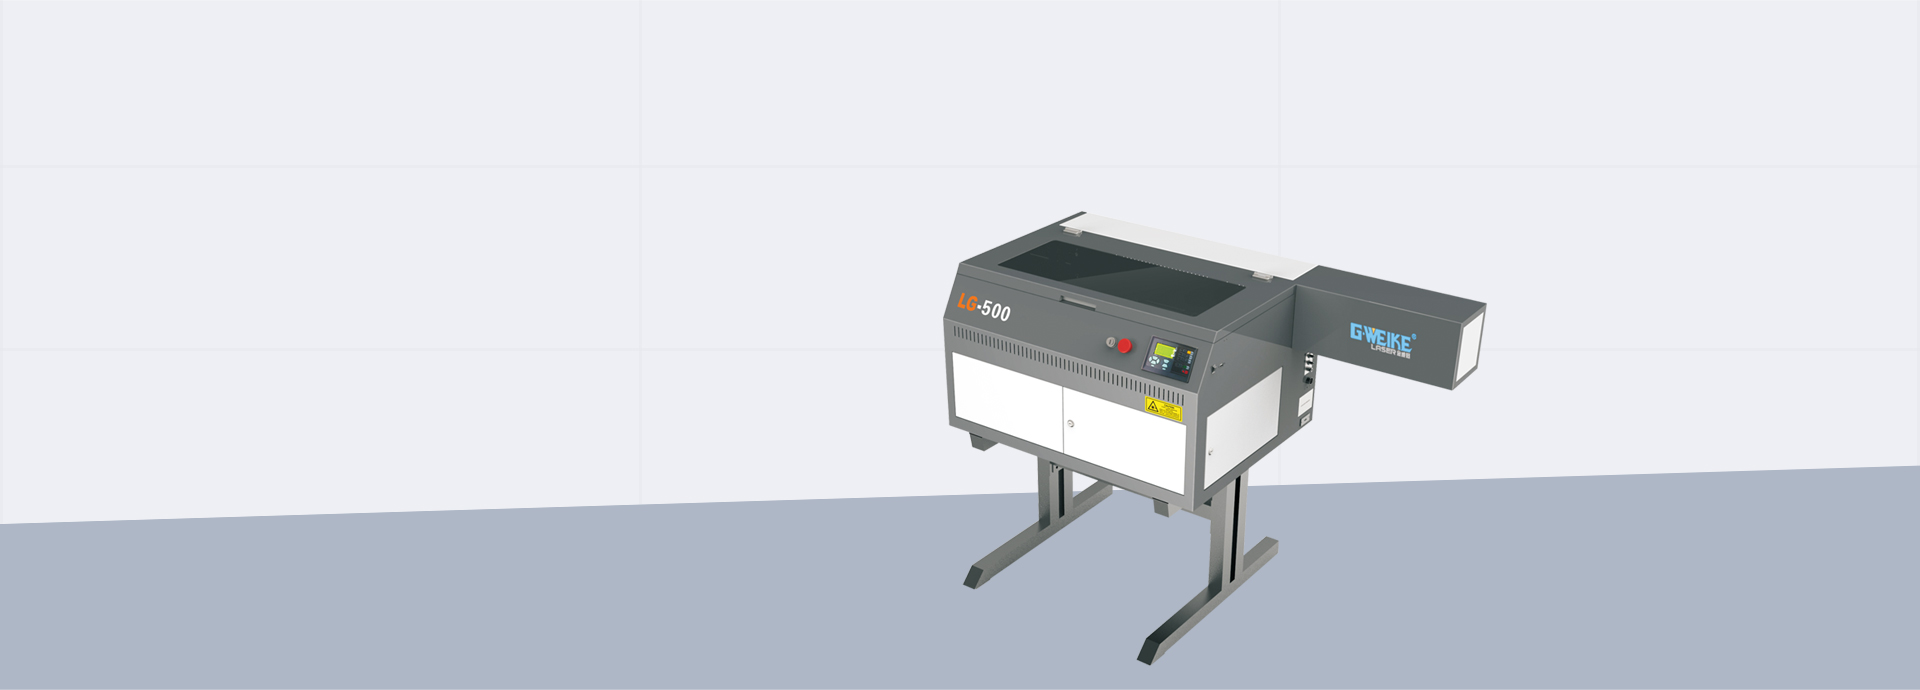 LG500 CO2 laser cutting machine